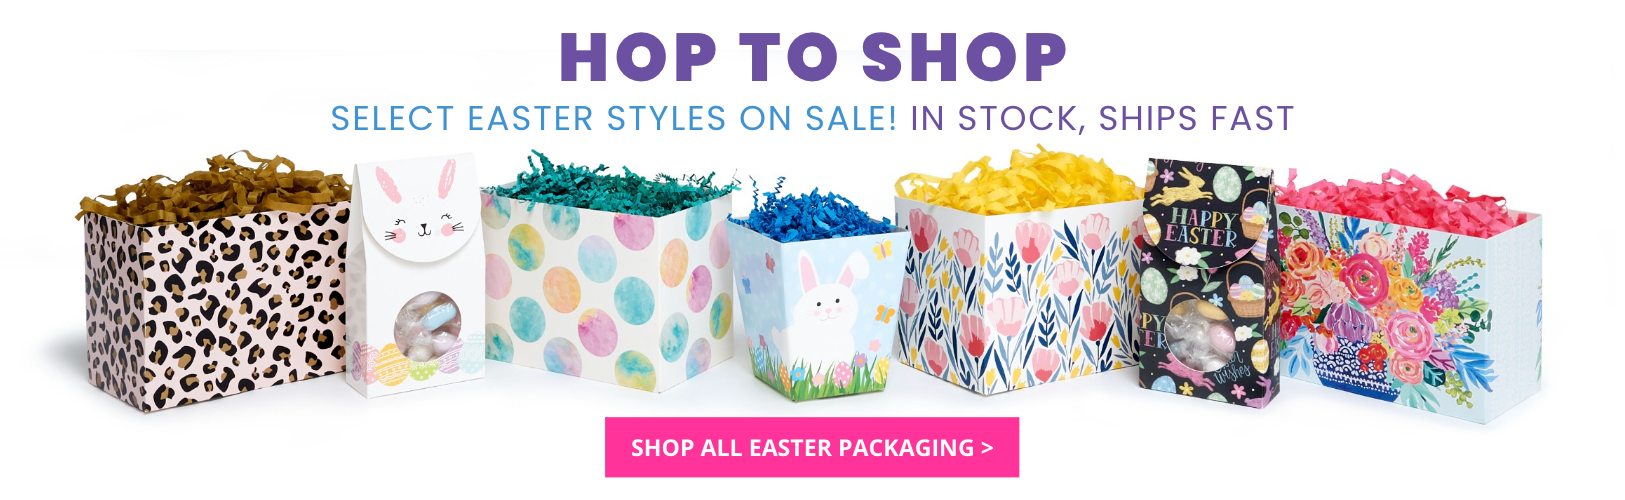 Get a Hop on Easter packaging